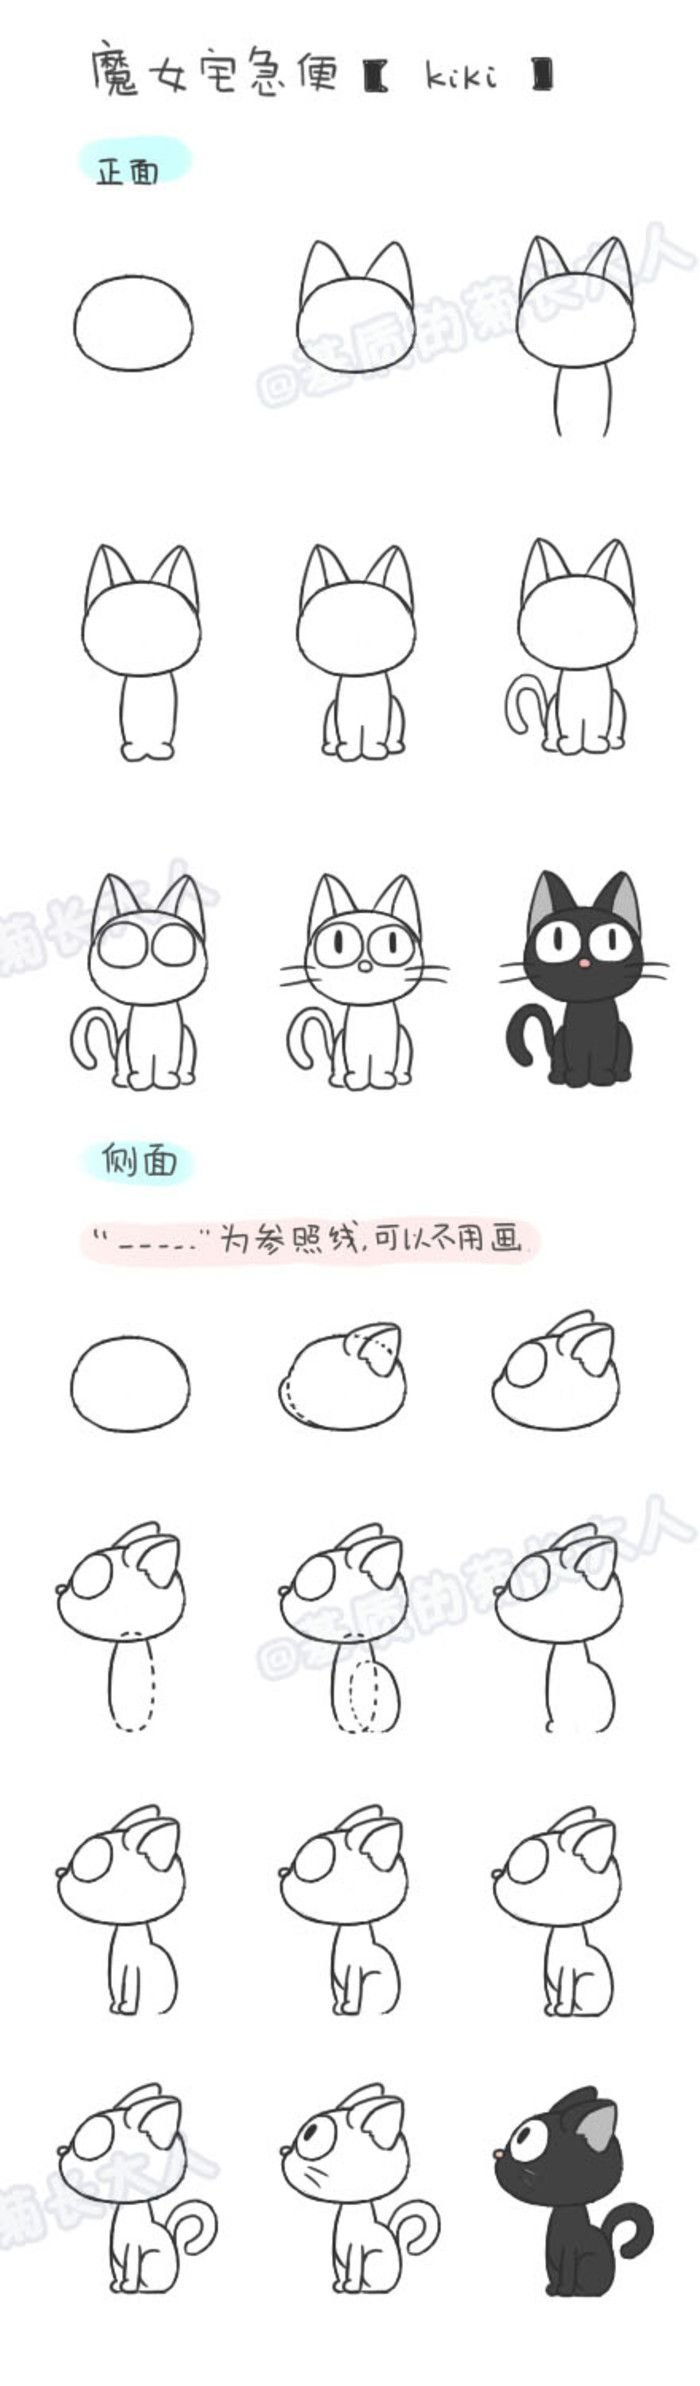 Как нарисовать котика легко